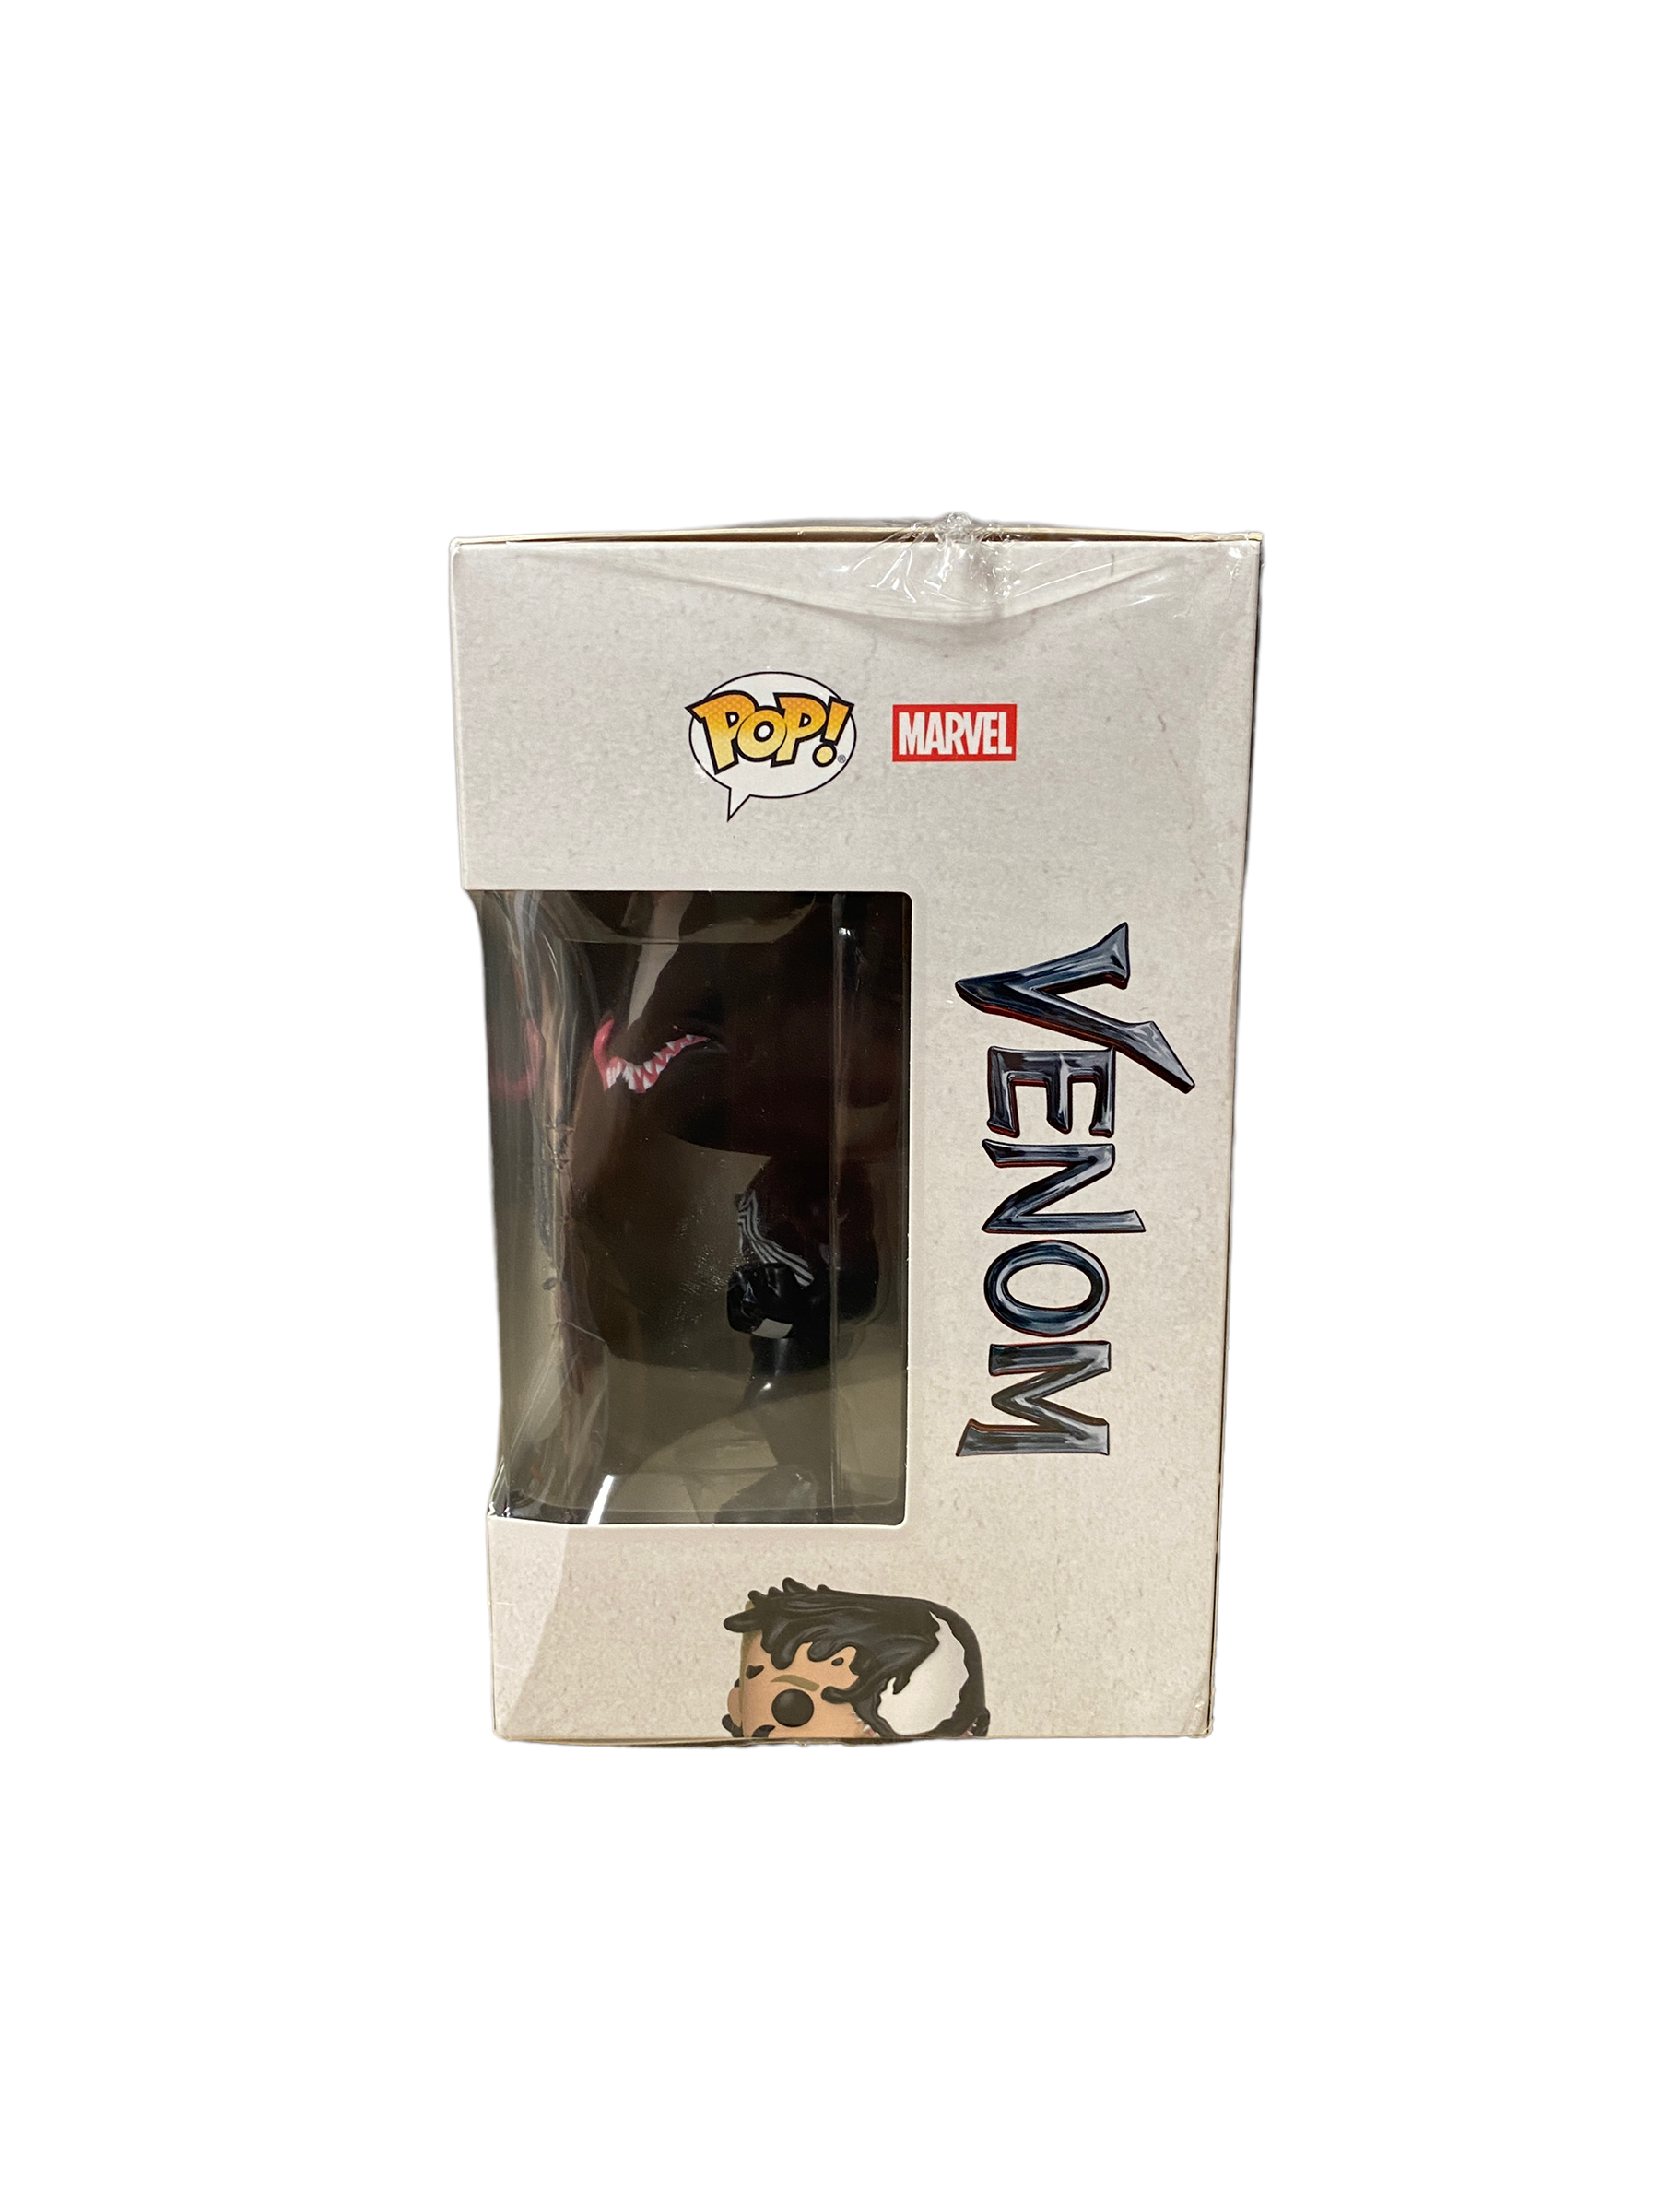 Venom Blu-Ray Bundle Funko Pop! - Venom - Sealed - Condition 8.75/10